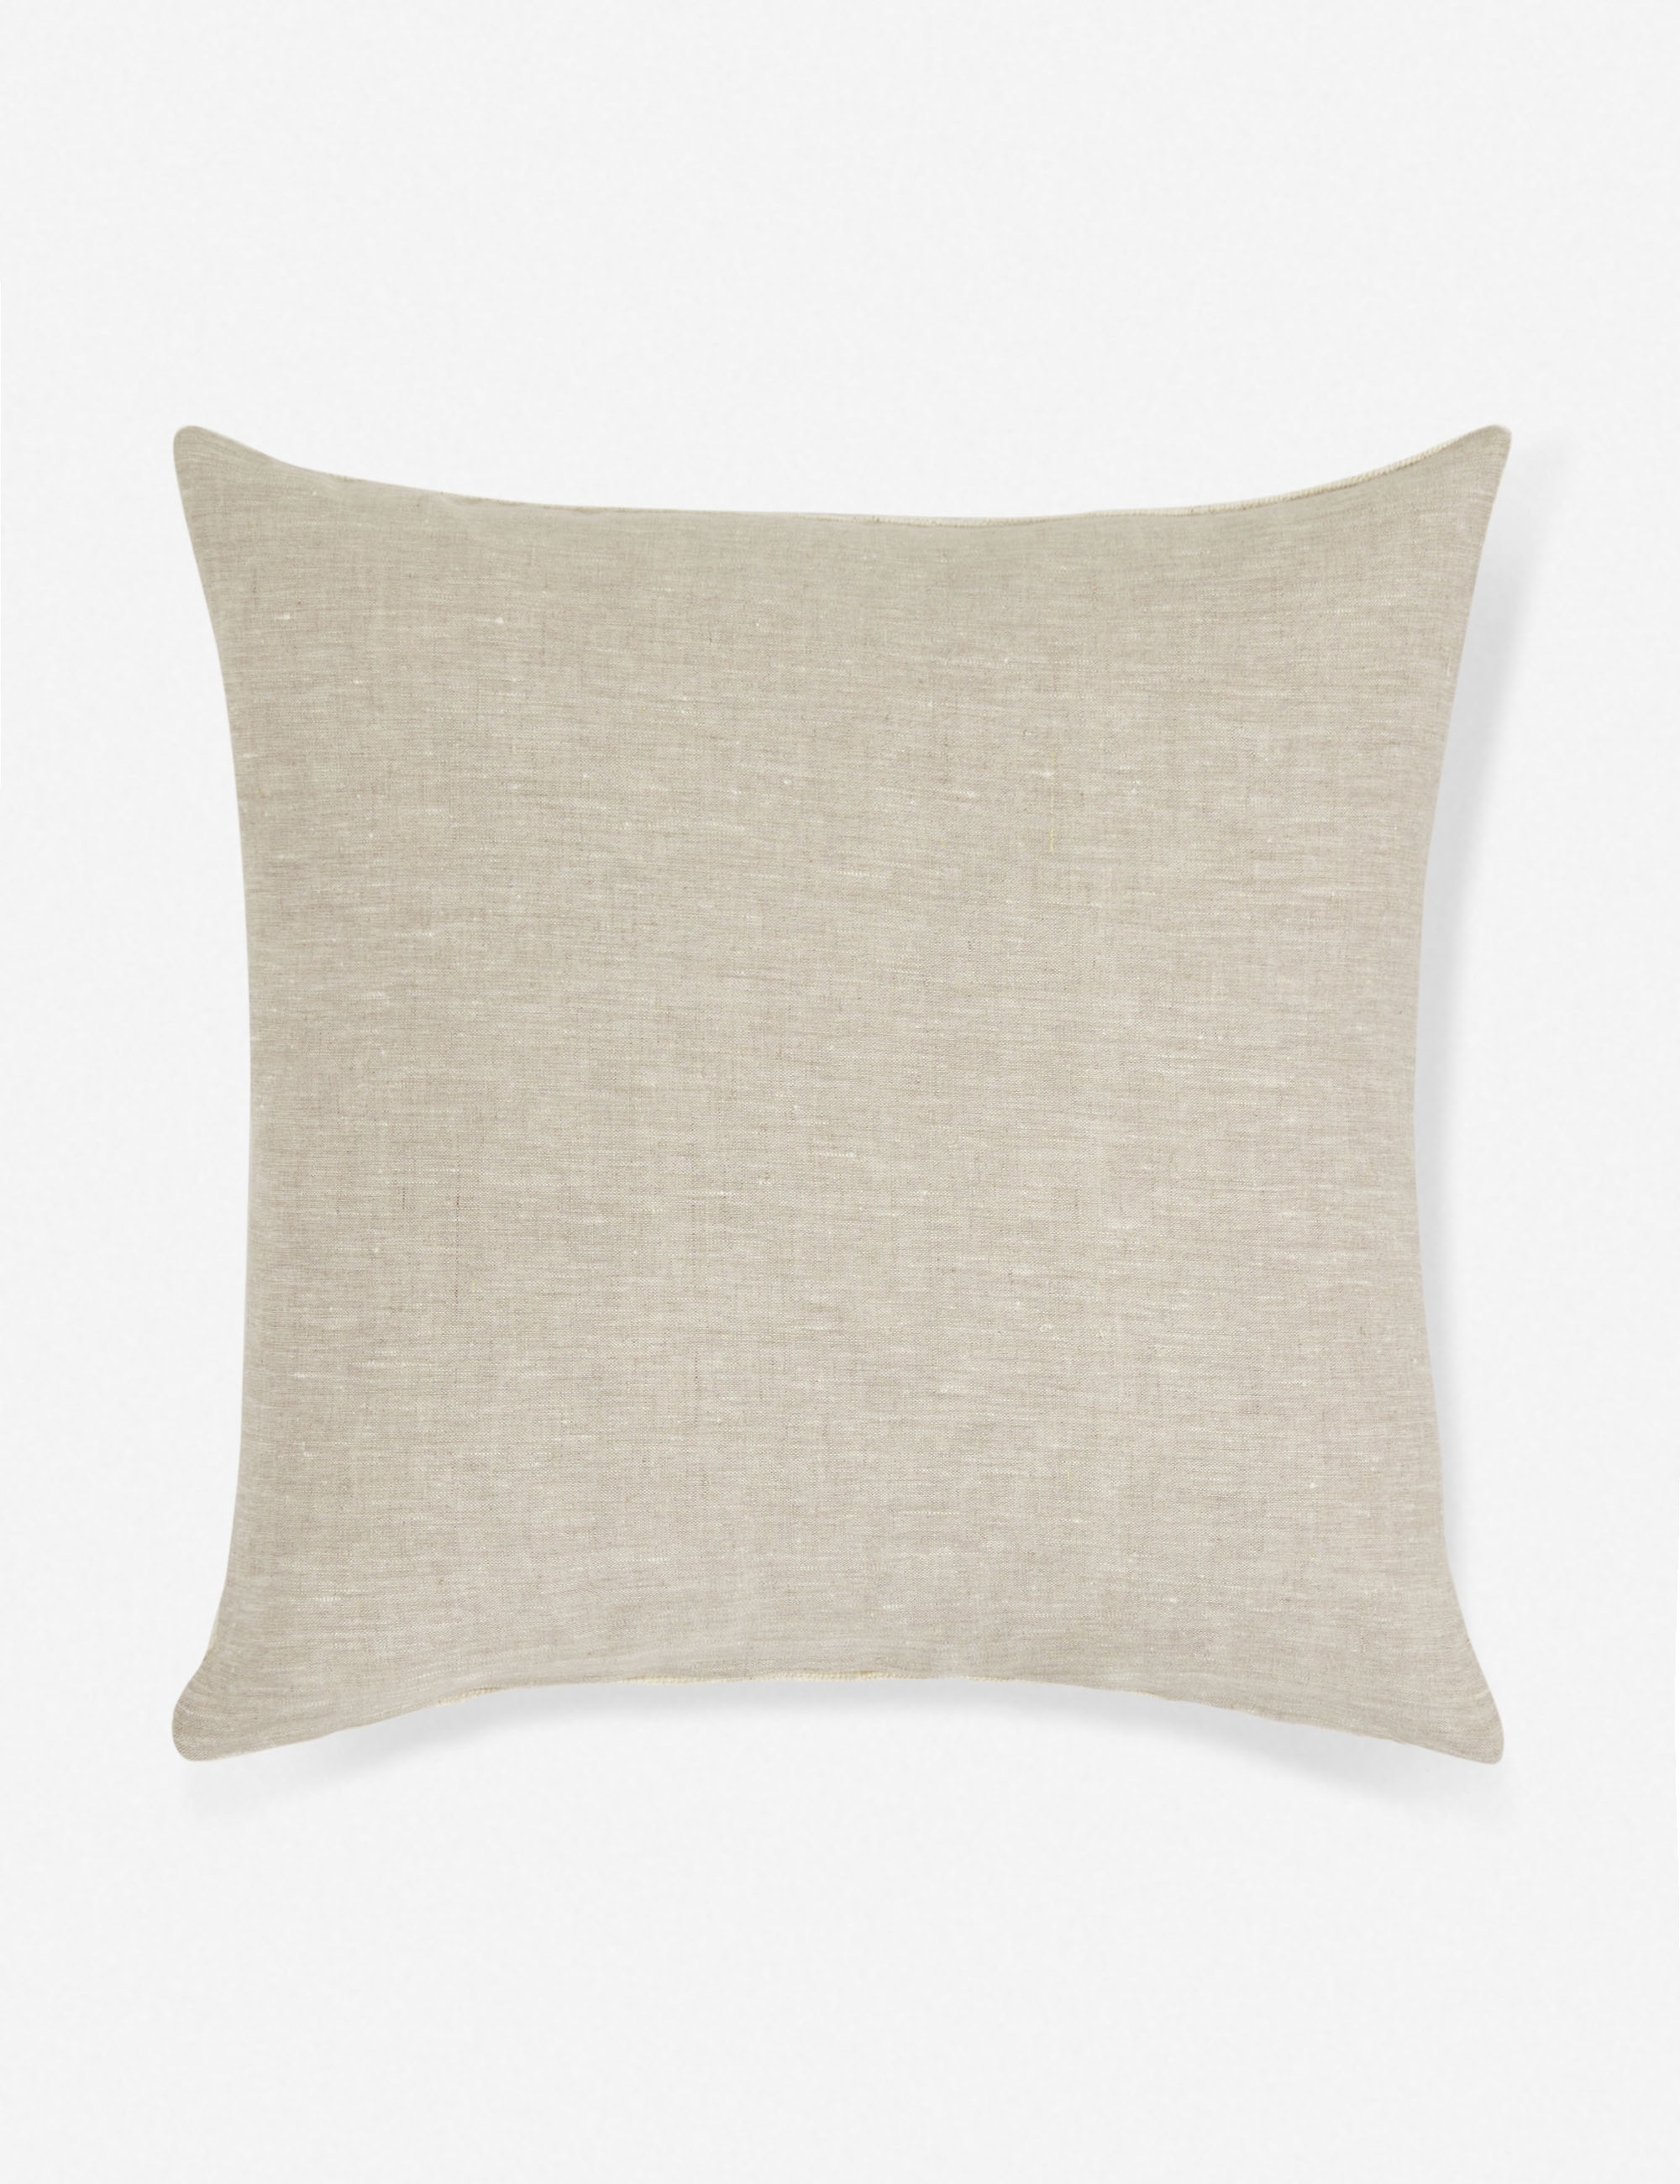 20" x 20" Rainey Mudcloth Pillow, Ivory - Image 1